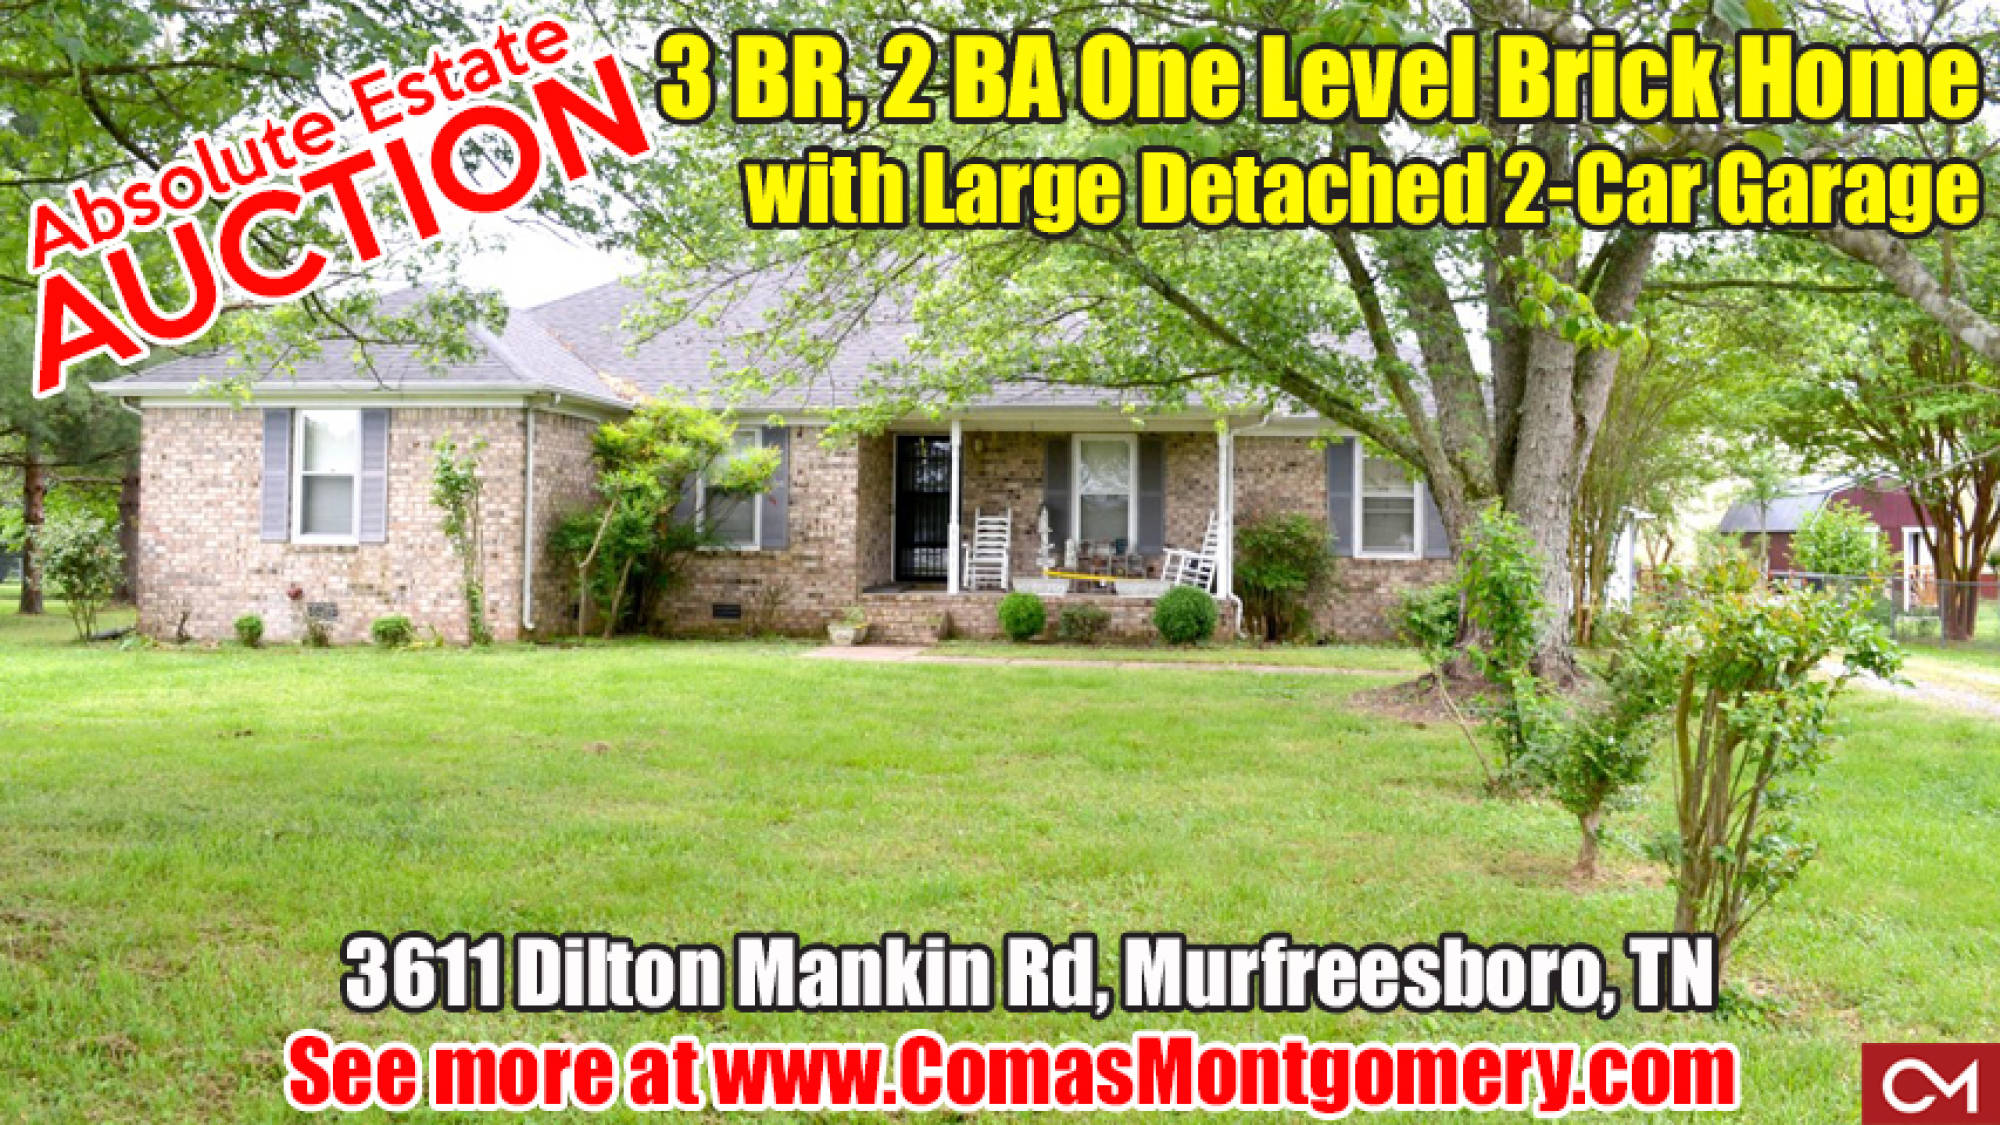 House, Home, Auction, Absolute, Real Estate, Murfreesboro, Garage, Comas, Montgomery, Dilton, Mankin, Merriman